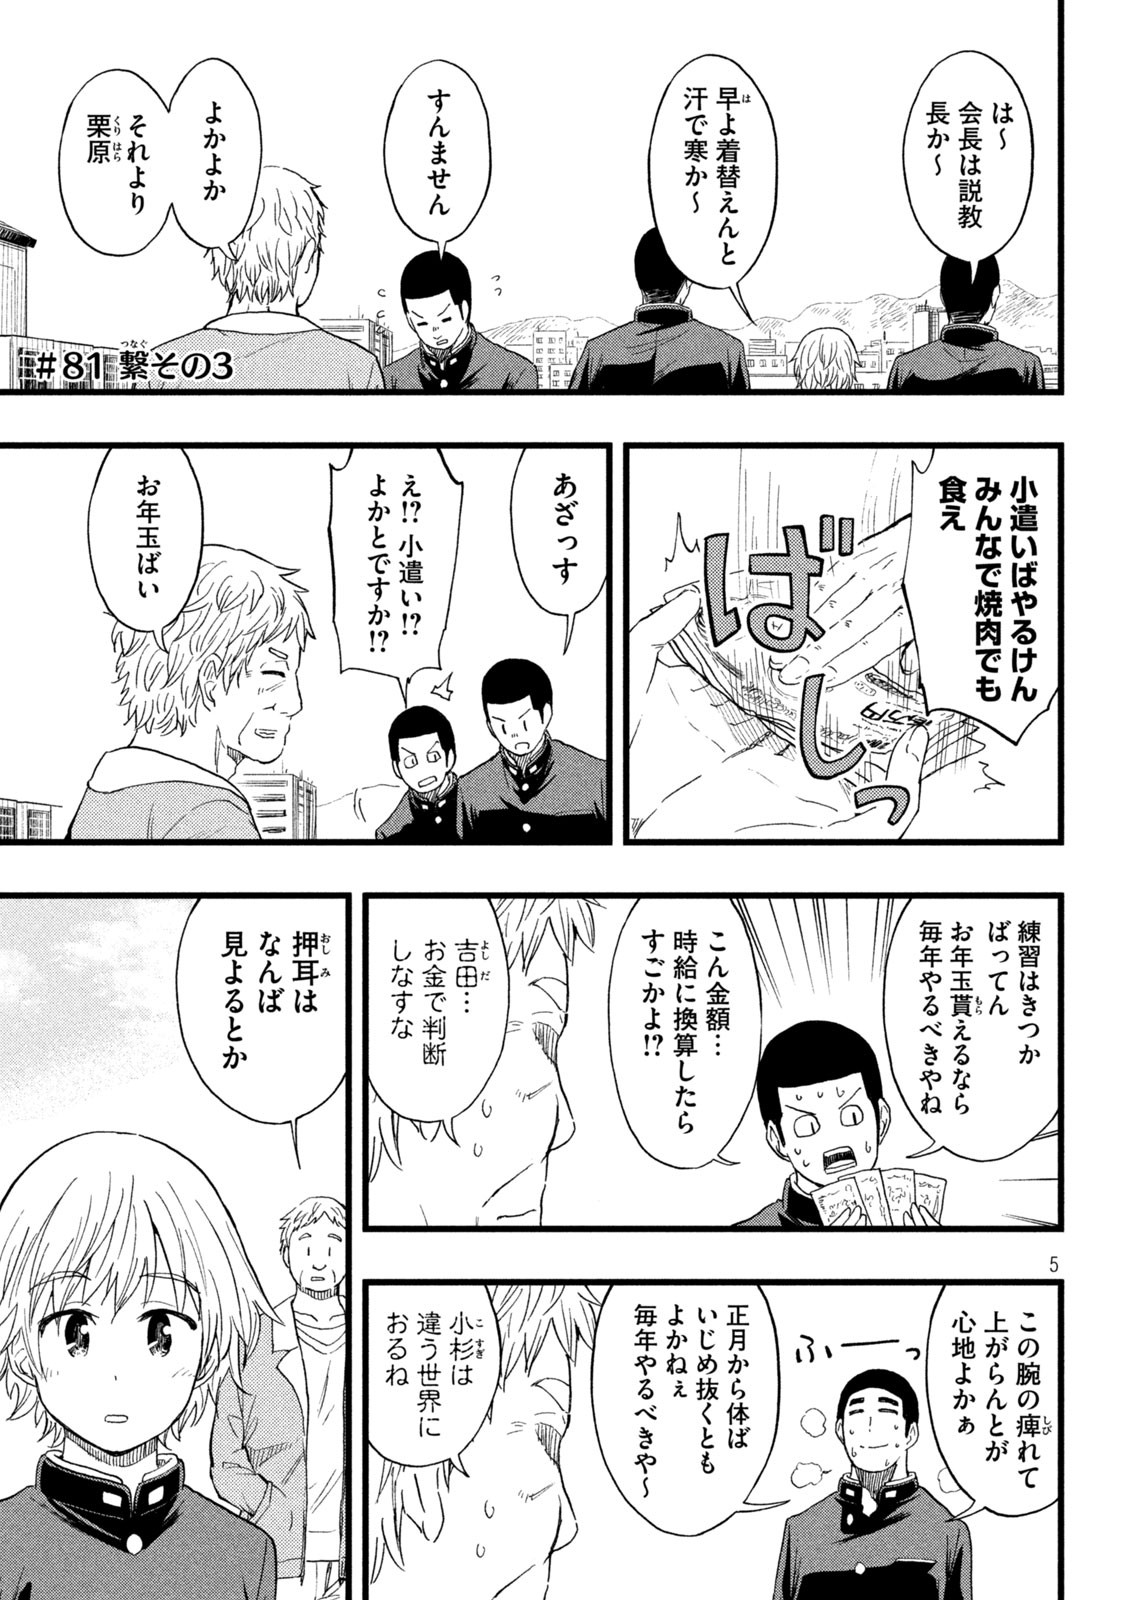 Koharu haru! - Chapter 81 - Page 1